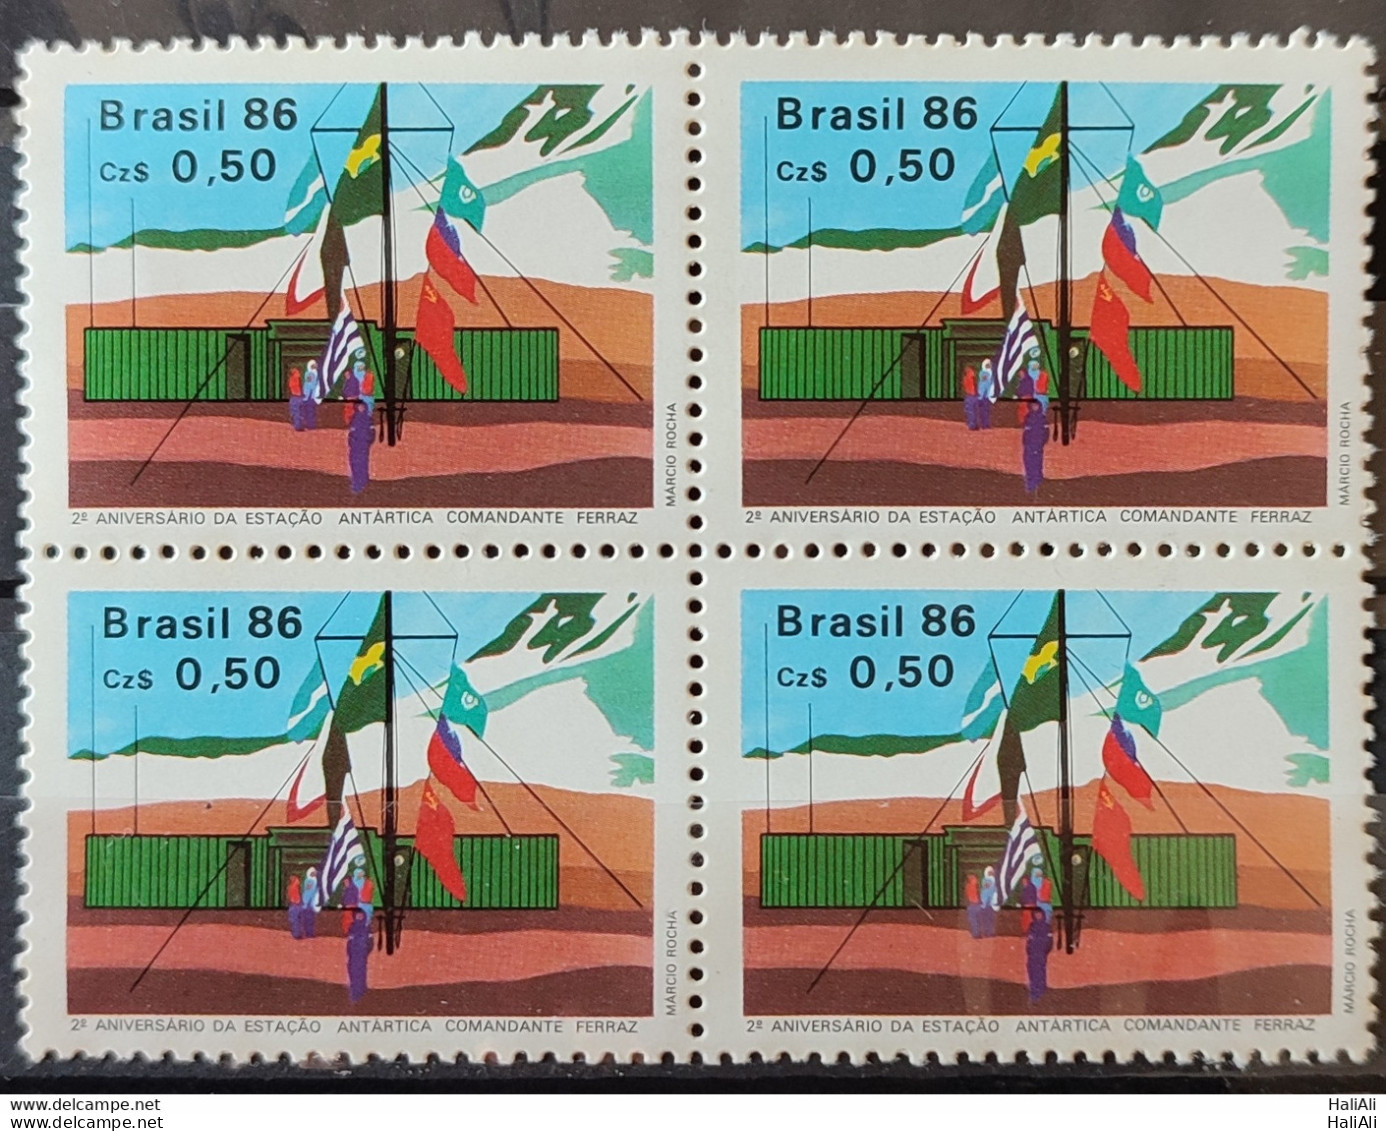 C 1508 Brazil Stamp Antarctic Station Commander Ferraz Flag 1986 Block Of 4 2.jpg - Unused Stamps